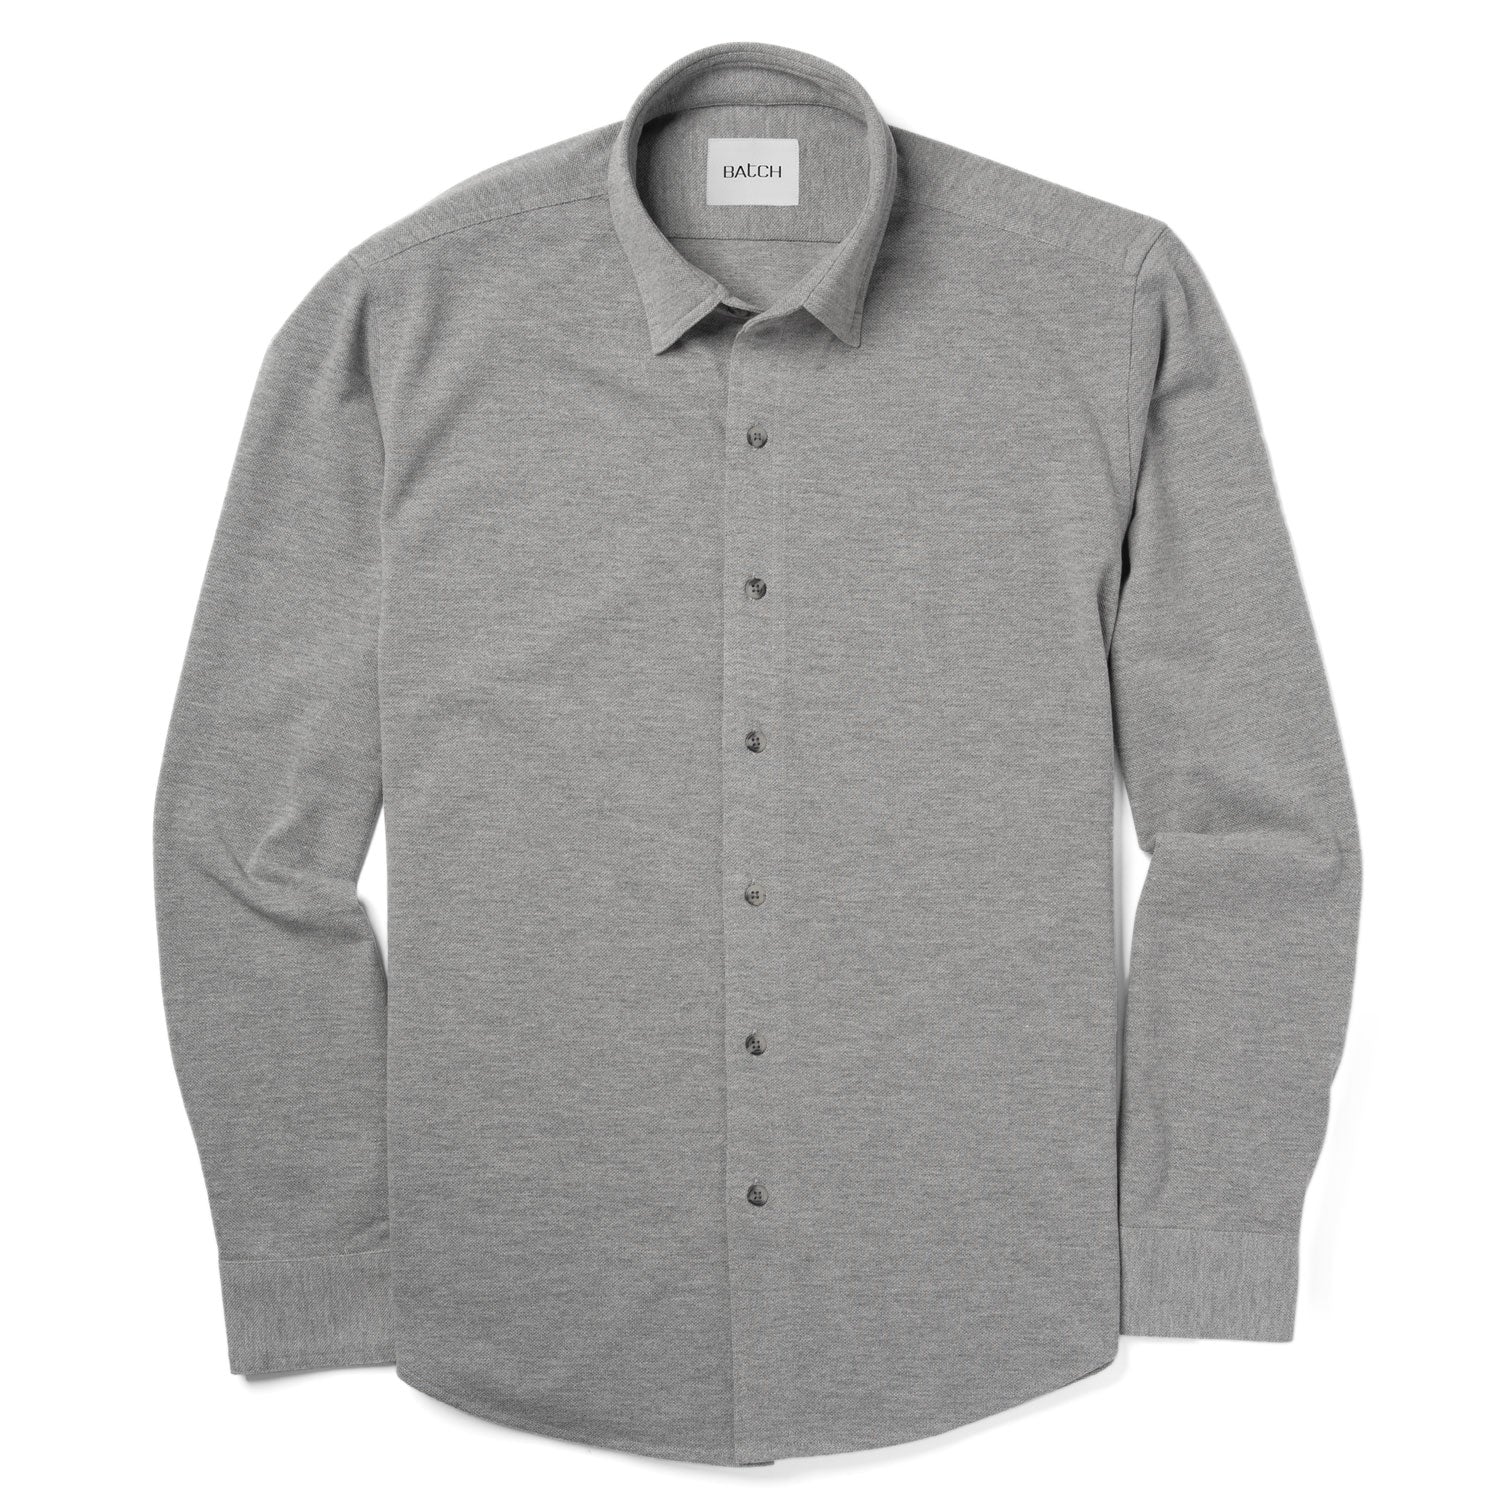 Essential Knit Shirt – Stone Gray Cotton Poly Pique